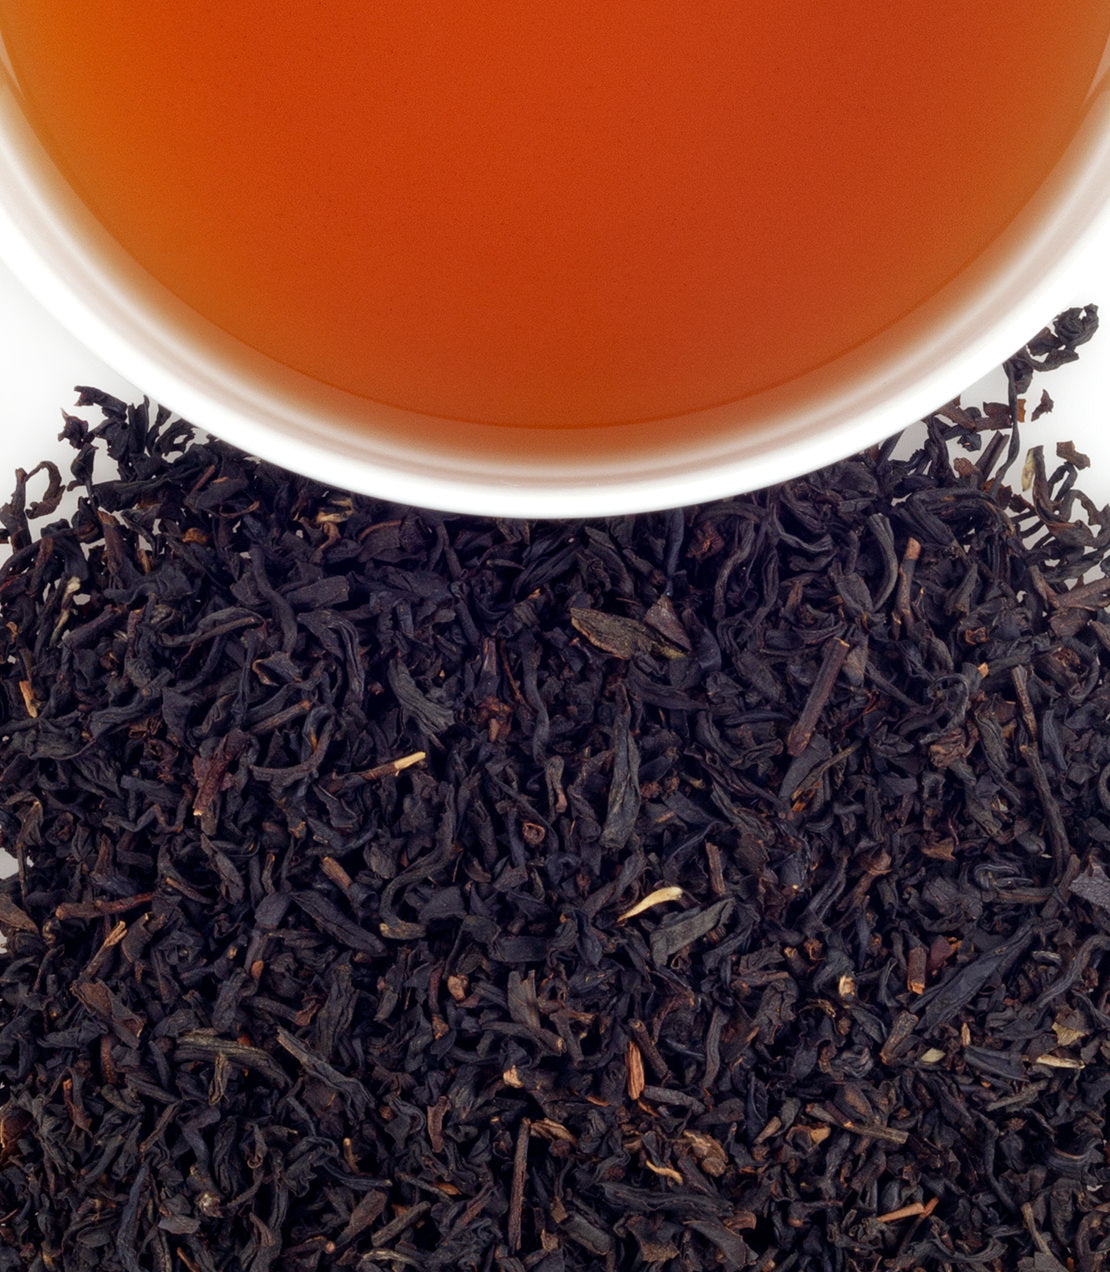 Tower of London Blend - Flavored Black Tea - Harney & Sons Fine Teas